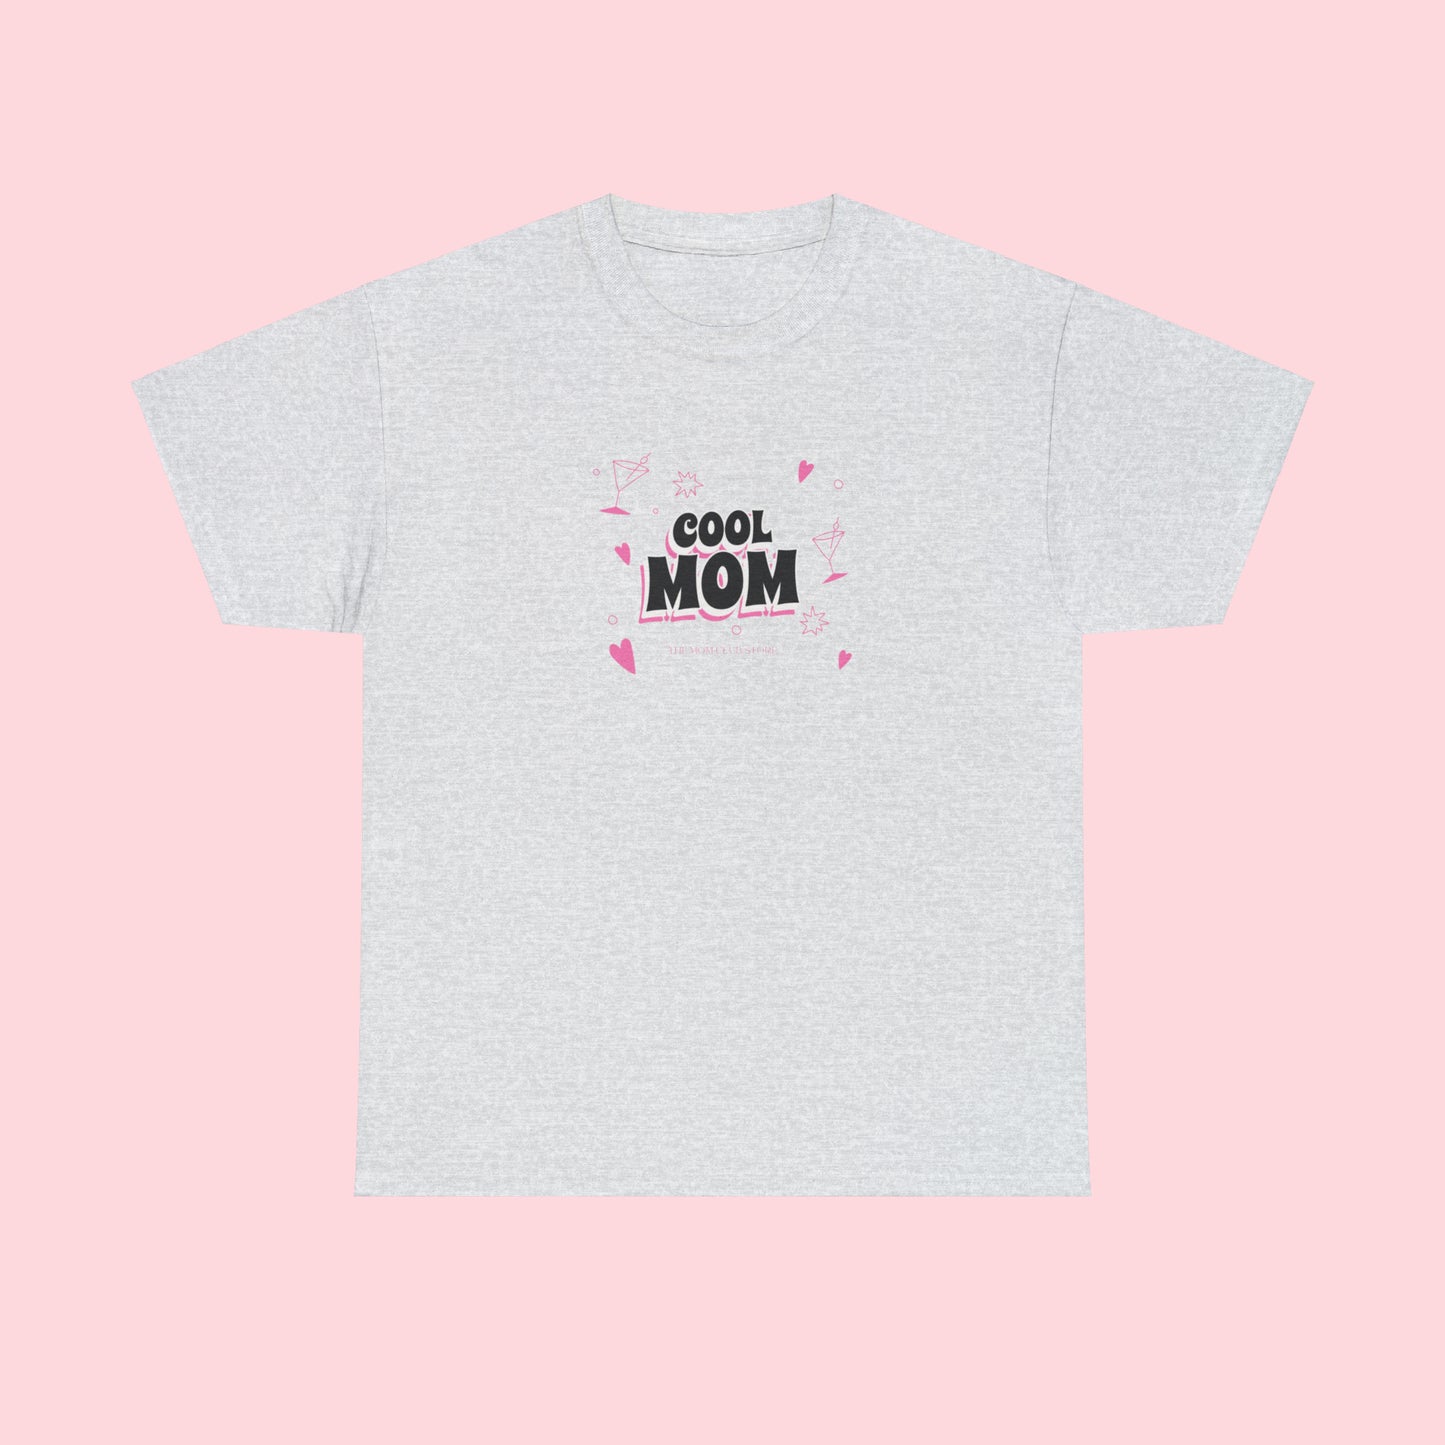 COOL MOM t-shirt